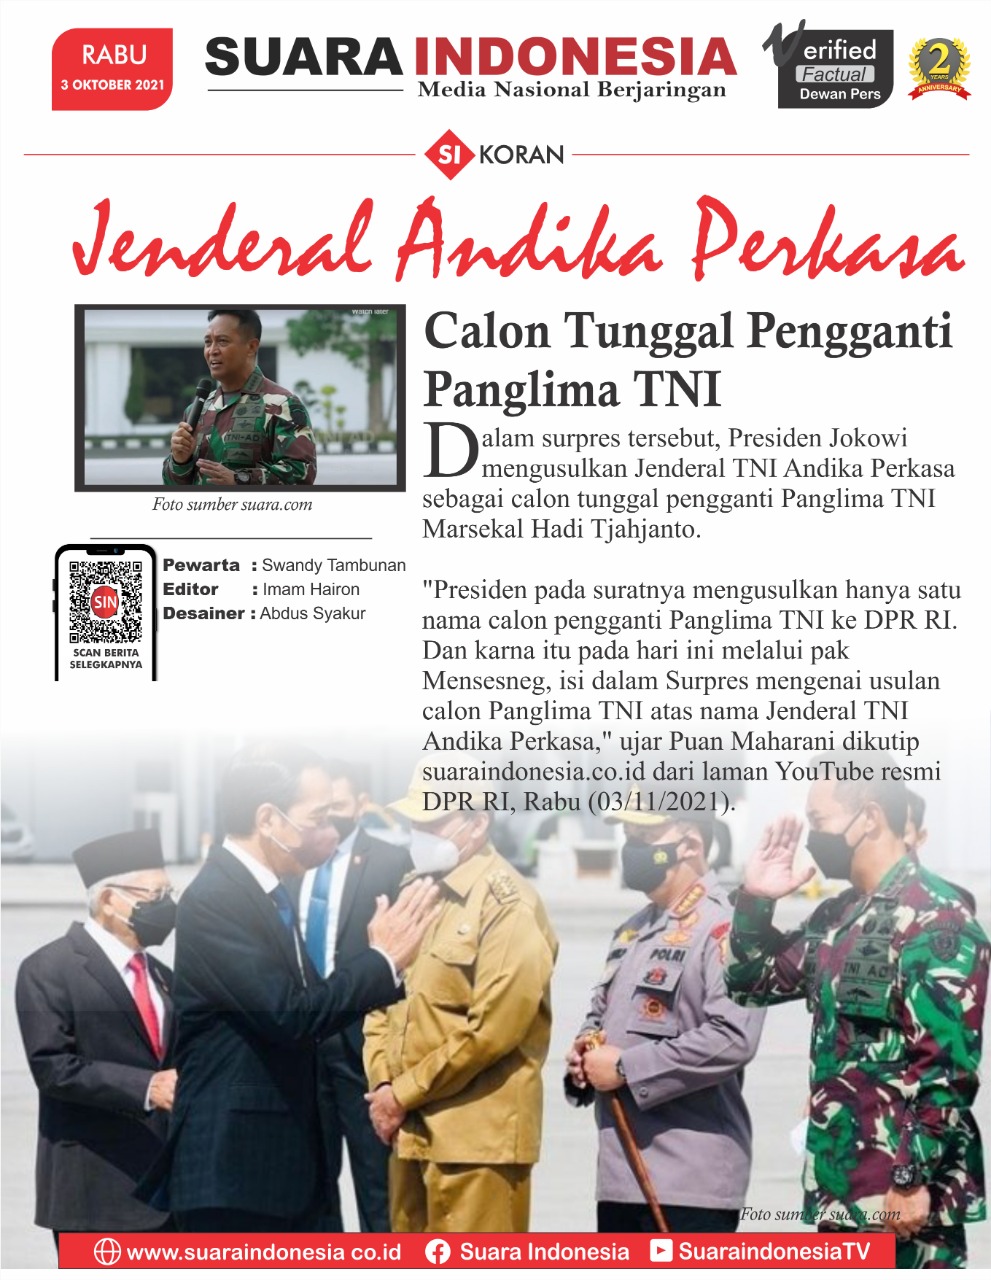 Andika Perkasa, Calon Tunggal Panglima TNI 